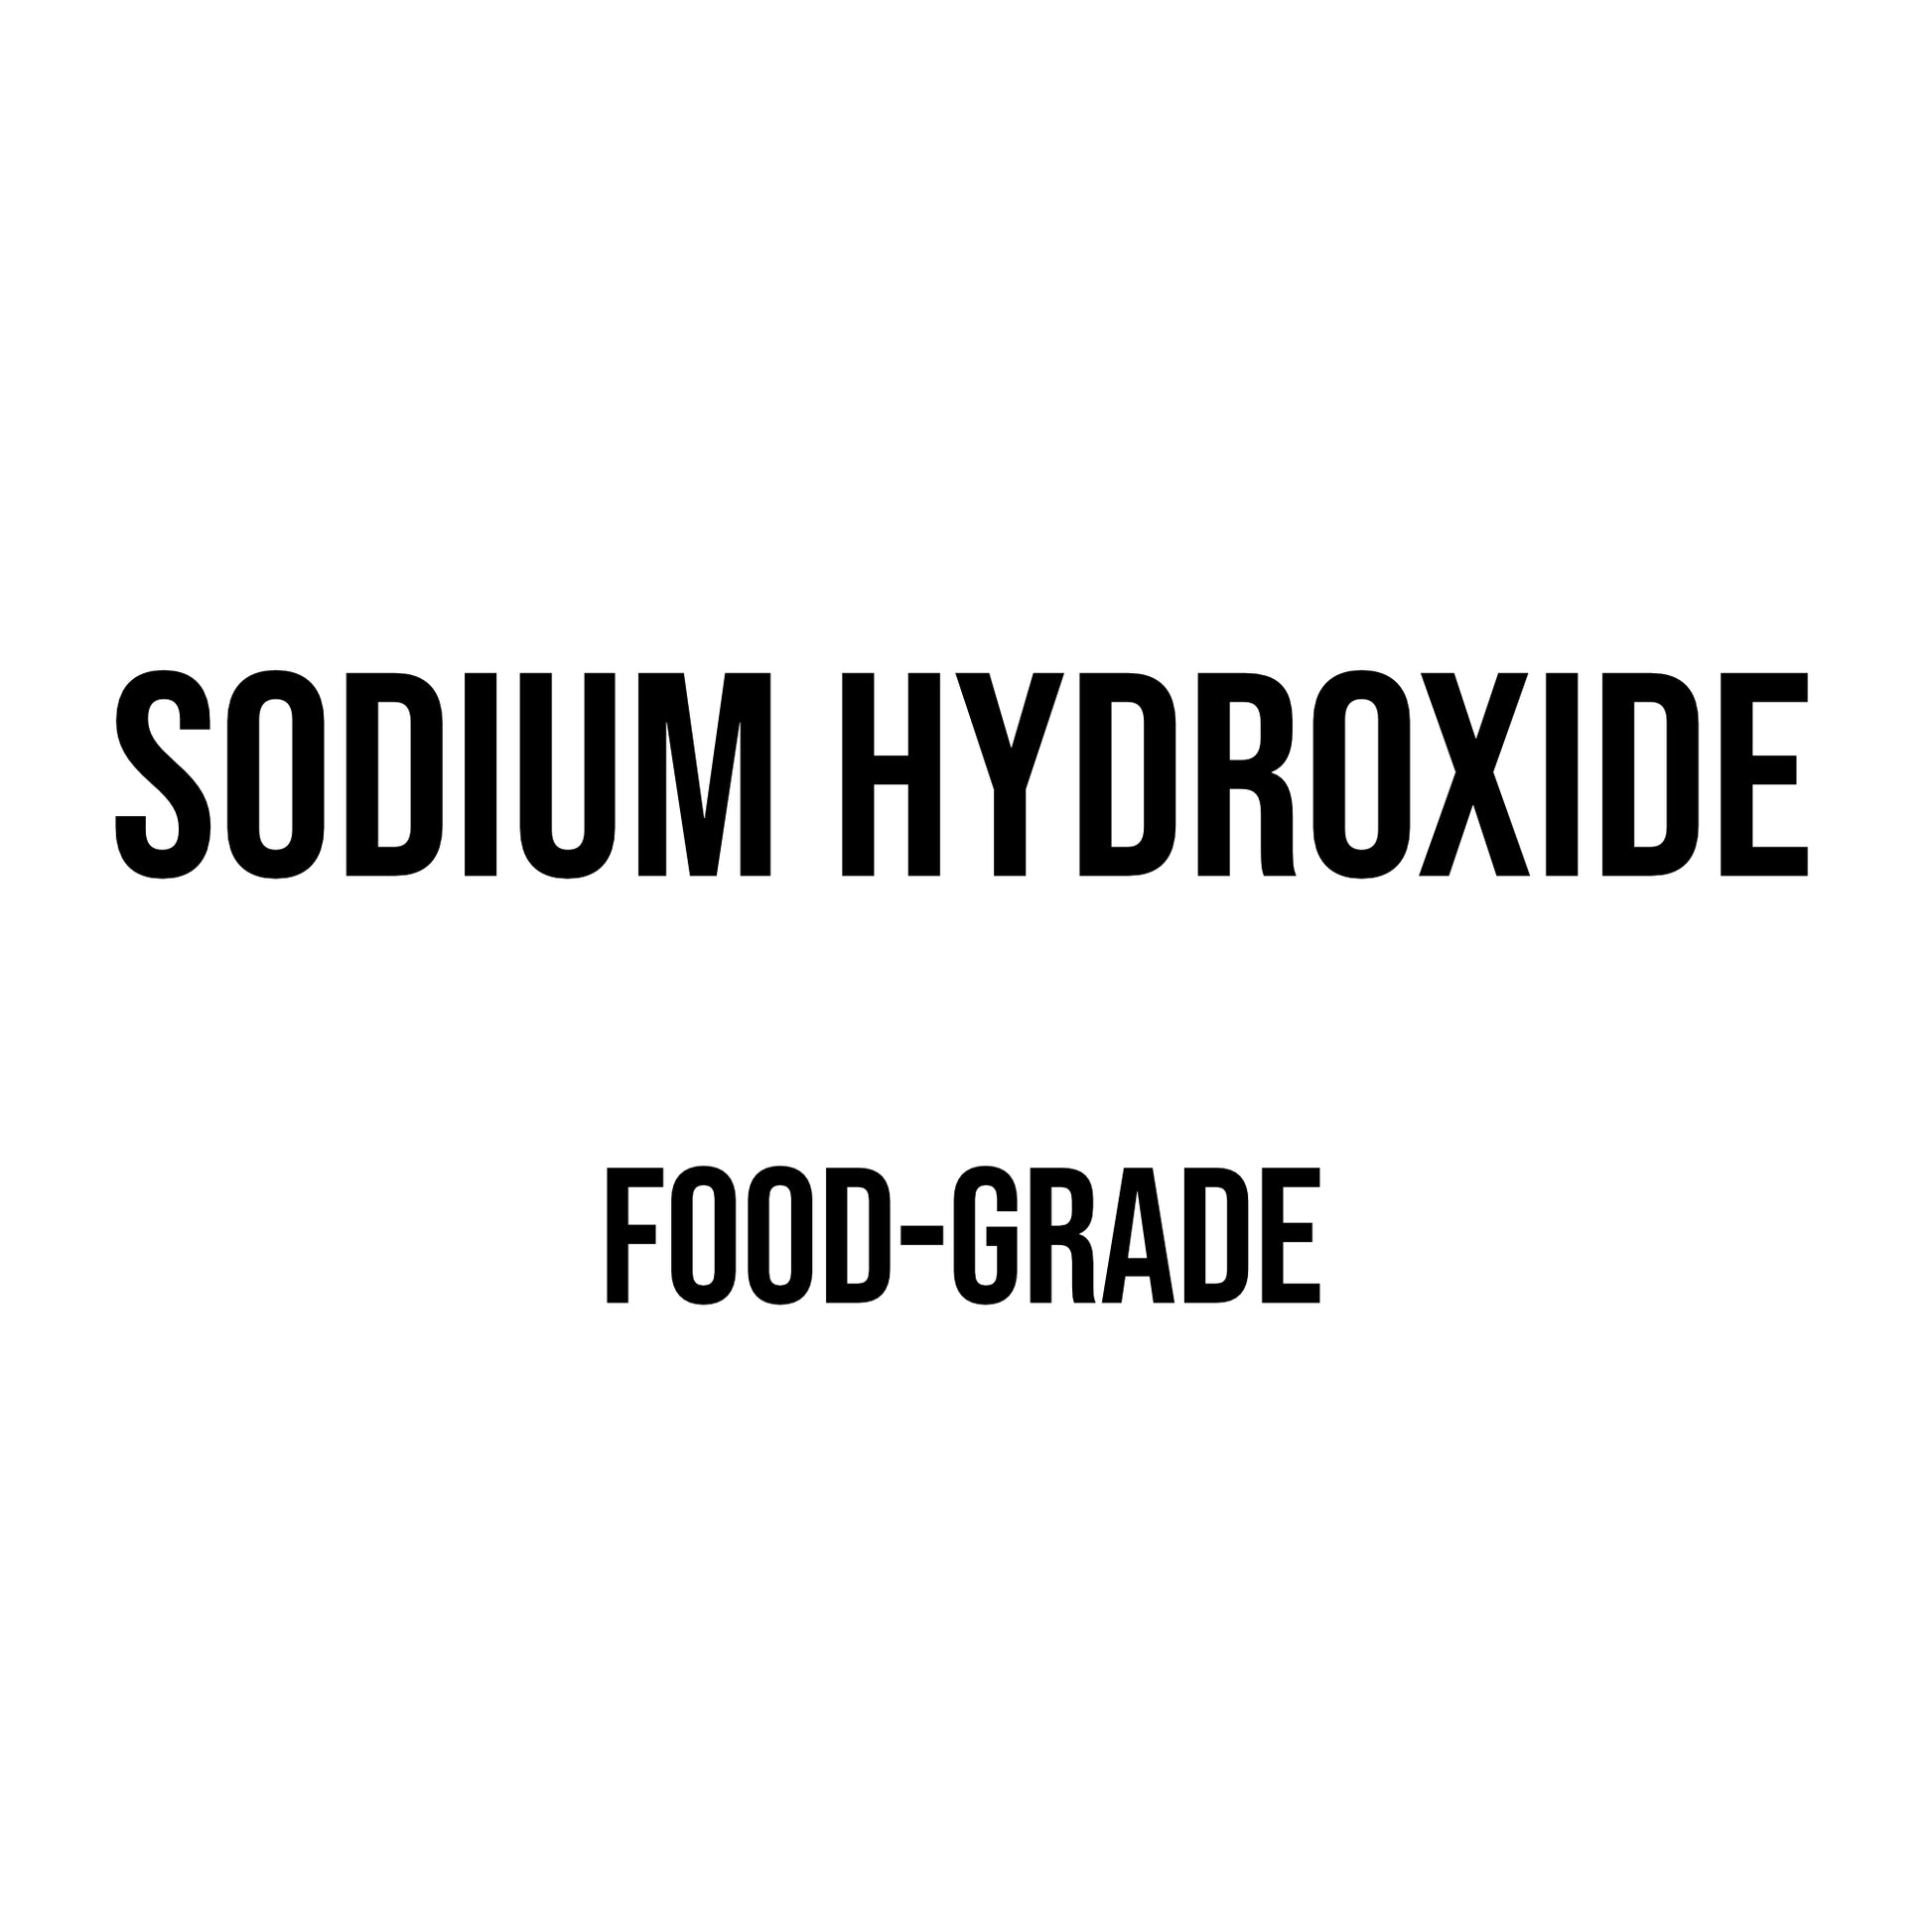 Sodium Hydroxide (Lye)